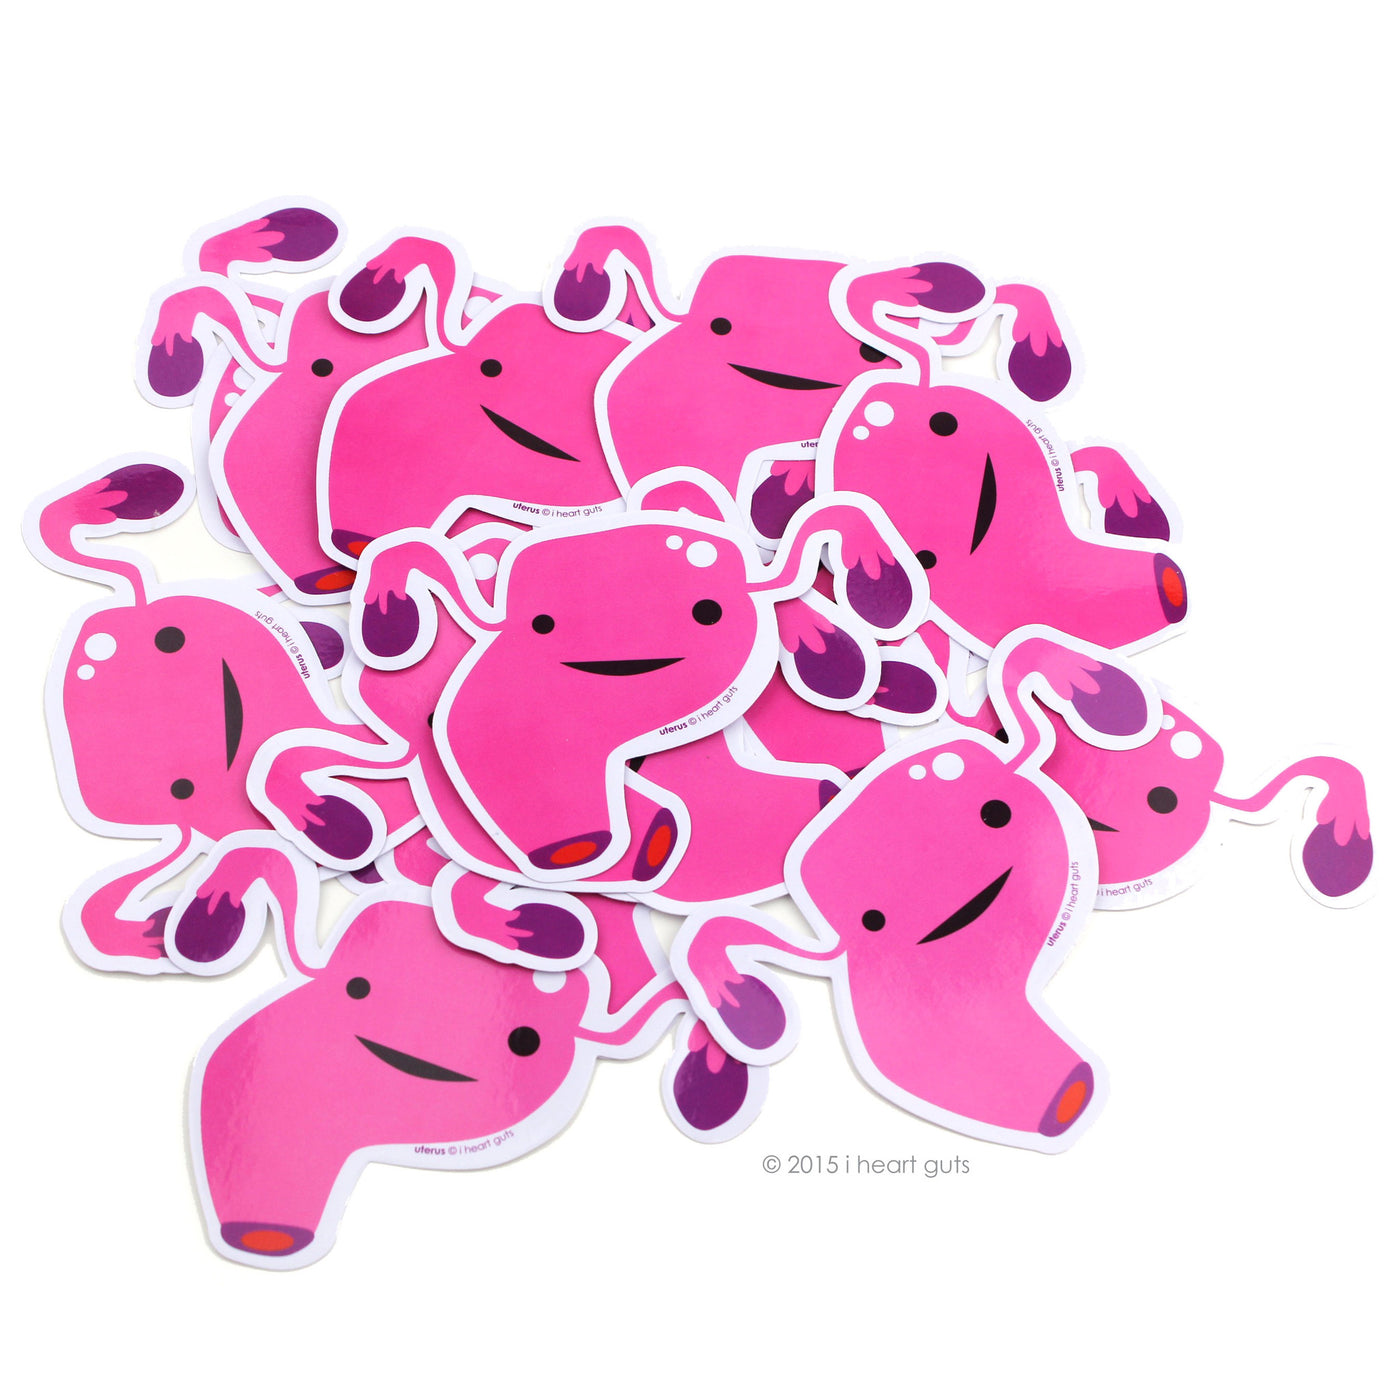 Uterus Stickers | Cute Uterus Stickers - Funny Uterus Stickers to Share